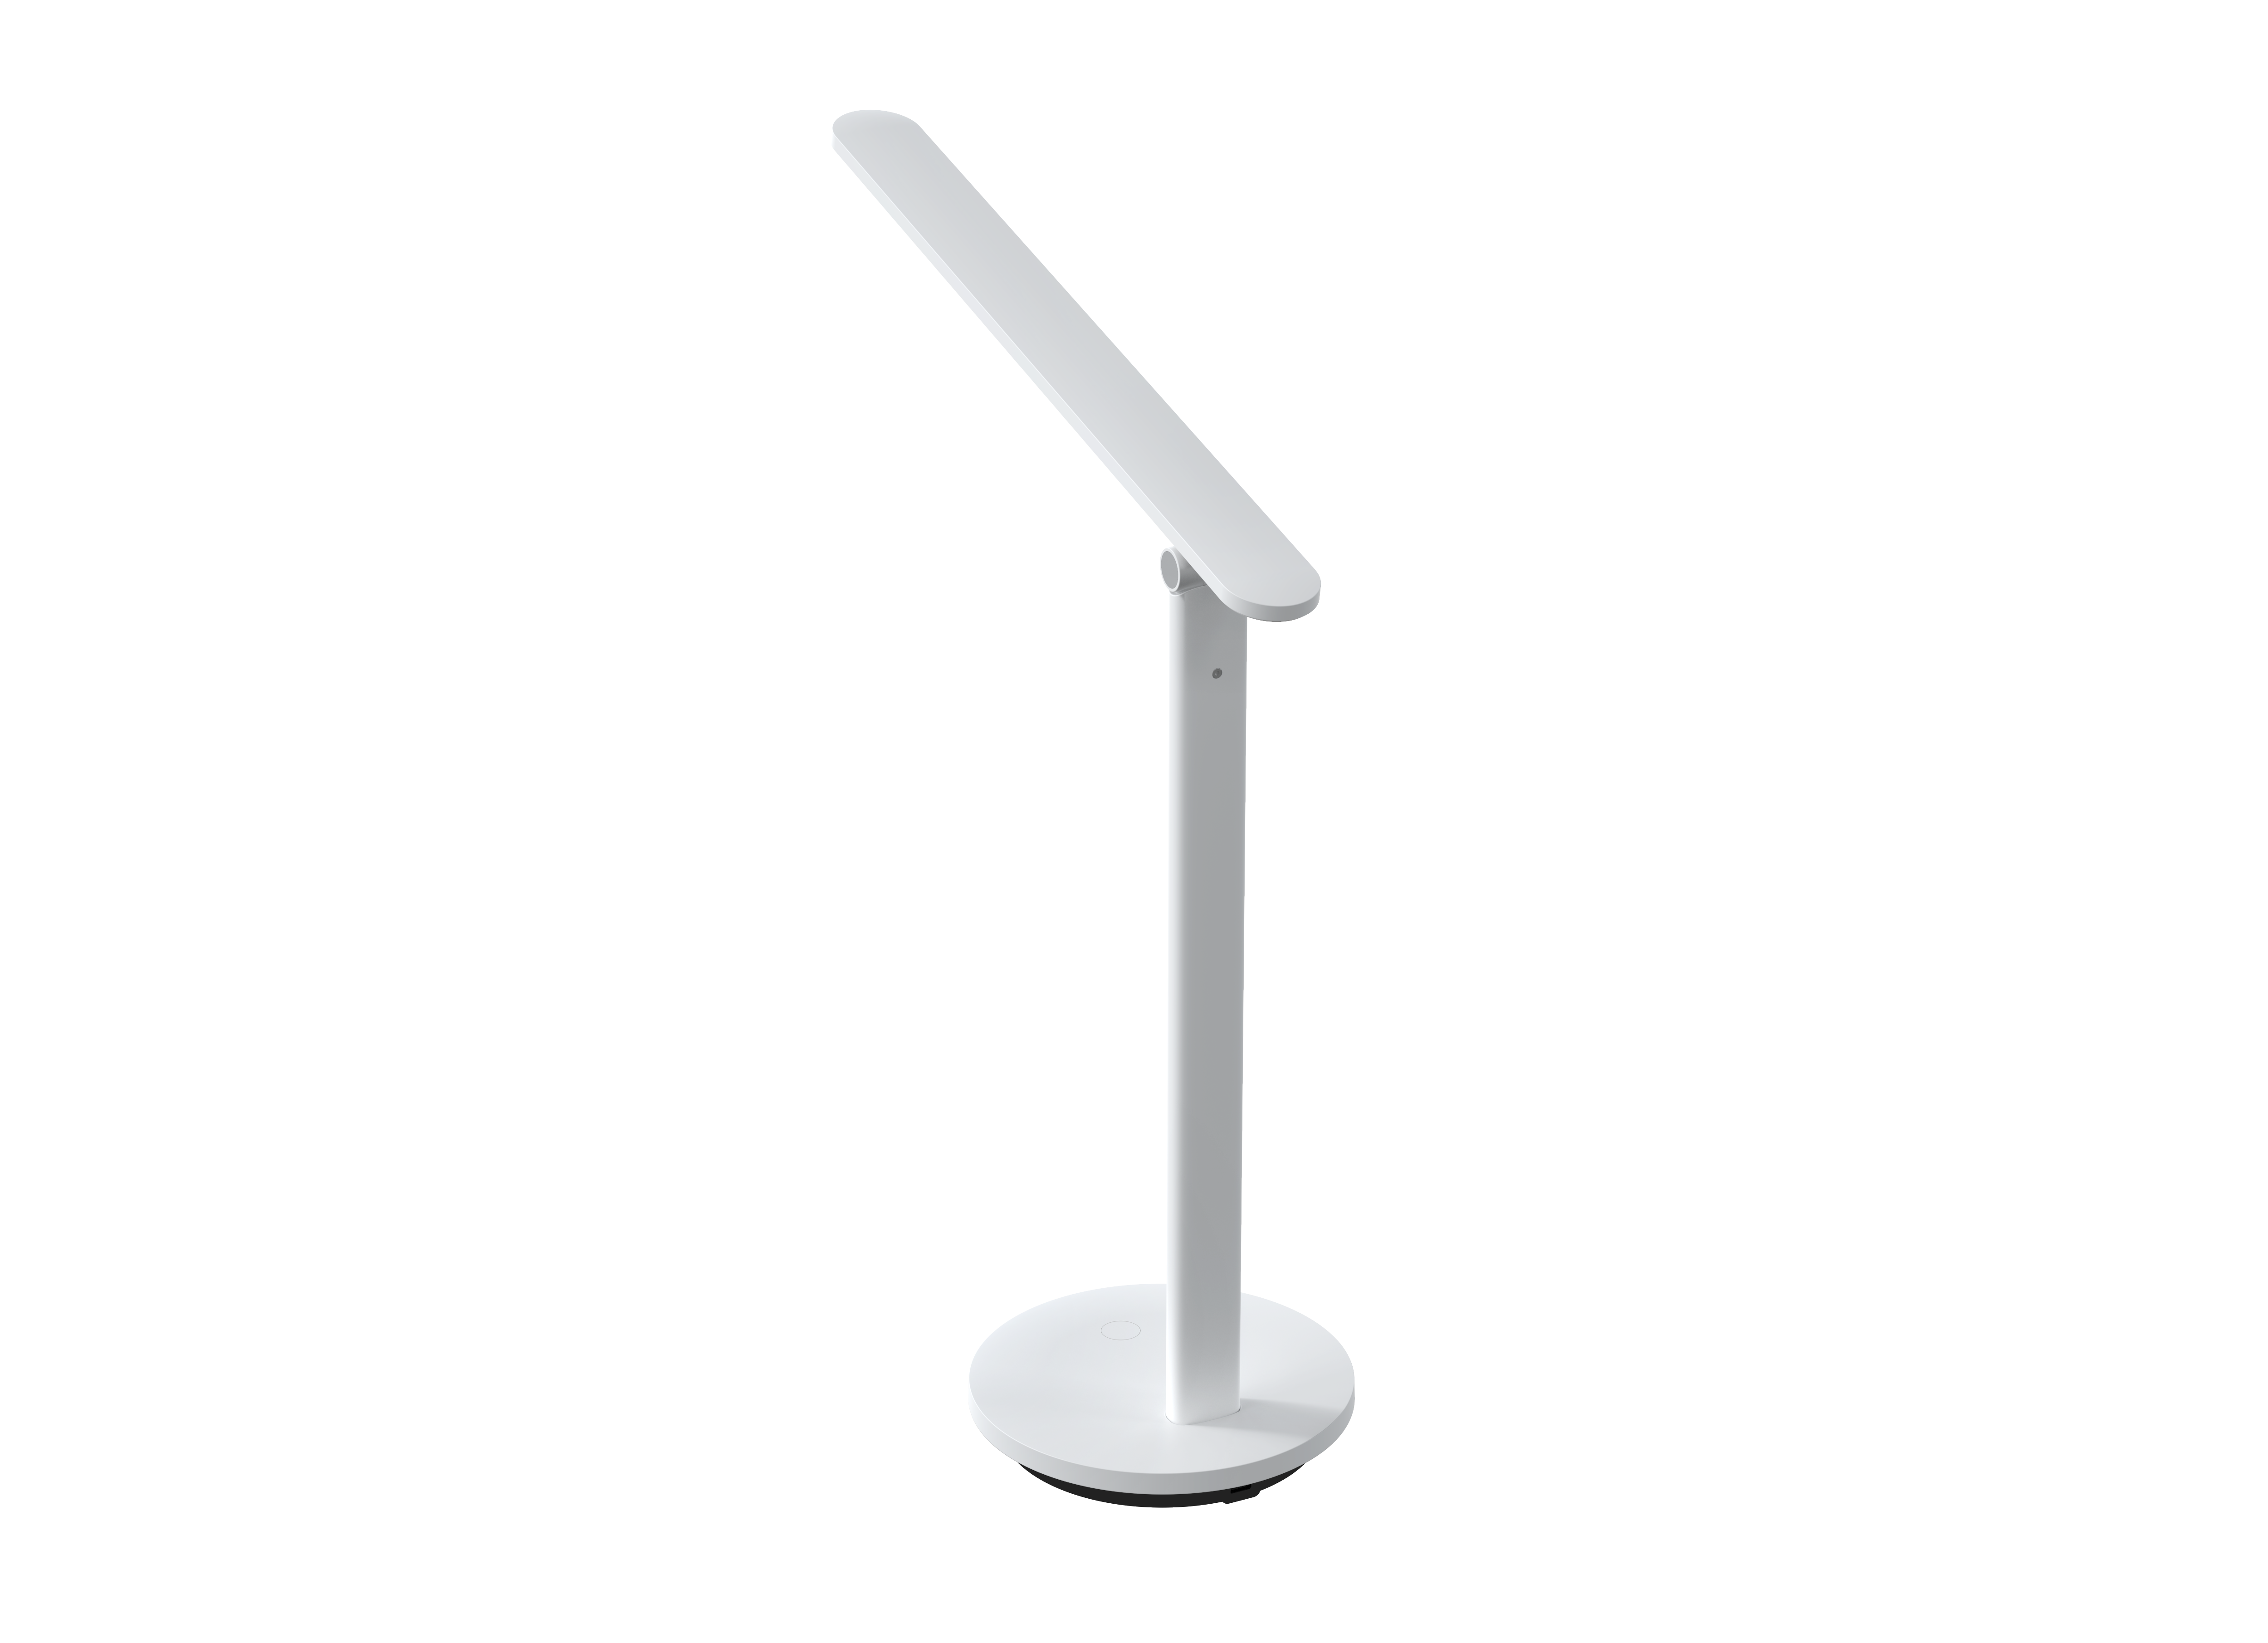 Yeelight LED Folding Desk Lamp Z1 Pro - The Time Machine - Jordan